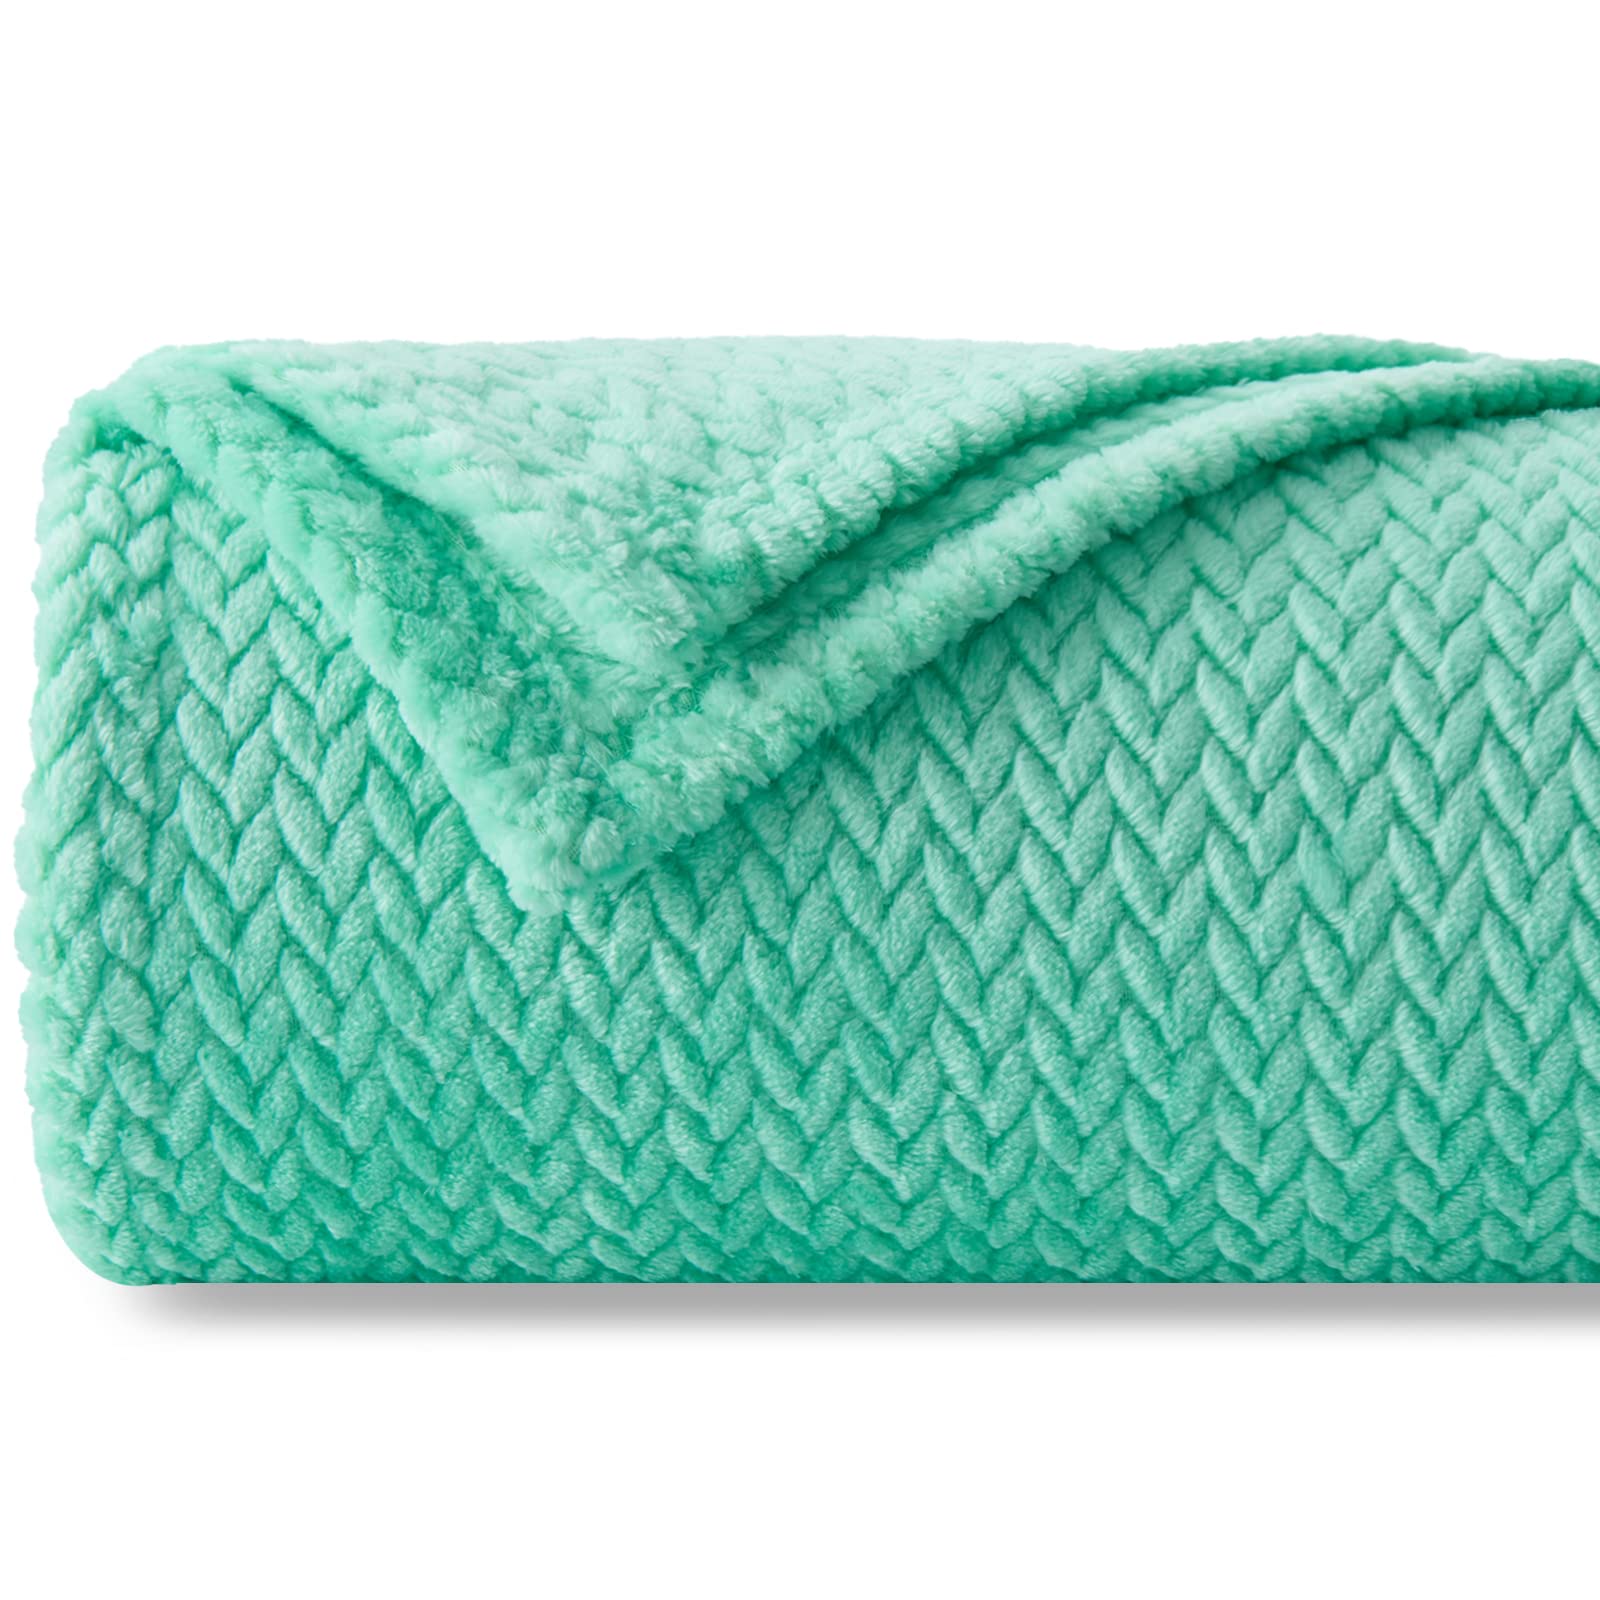 NEWCOSPLAY Super Soft Throw Blanket Aqua Premium Silky Flannel Fleece Leaves Pattern Lightweight Bed Blanket All Season Use (Aqu